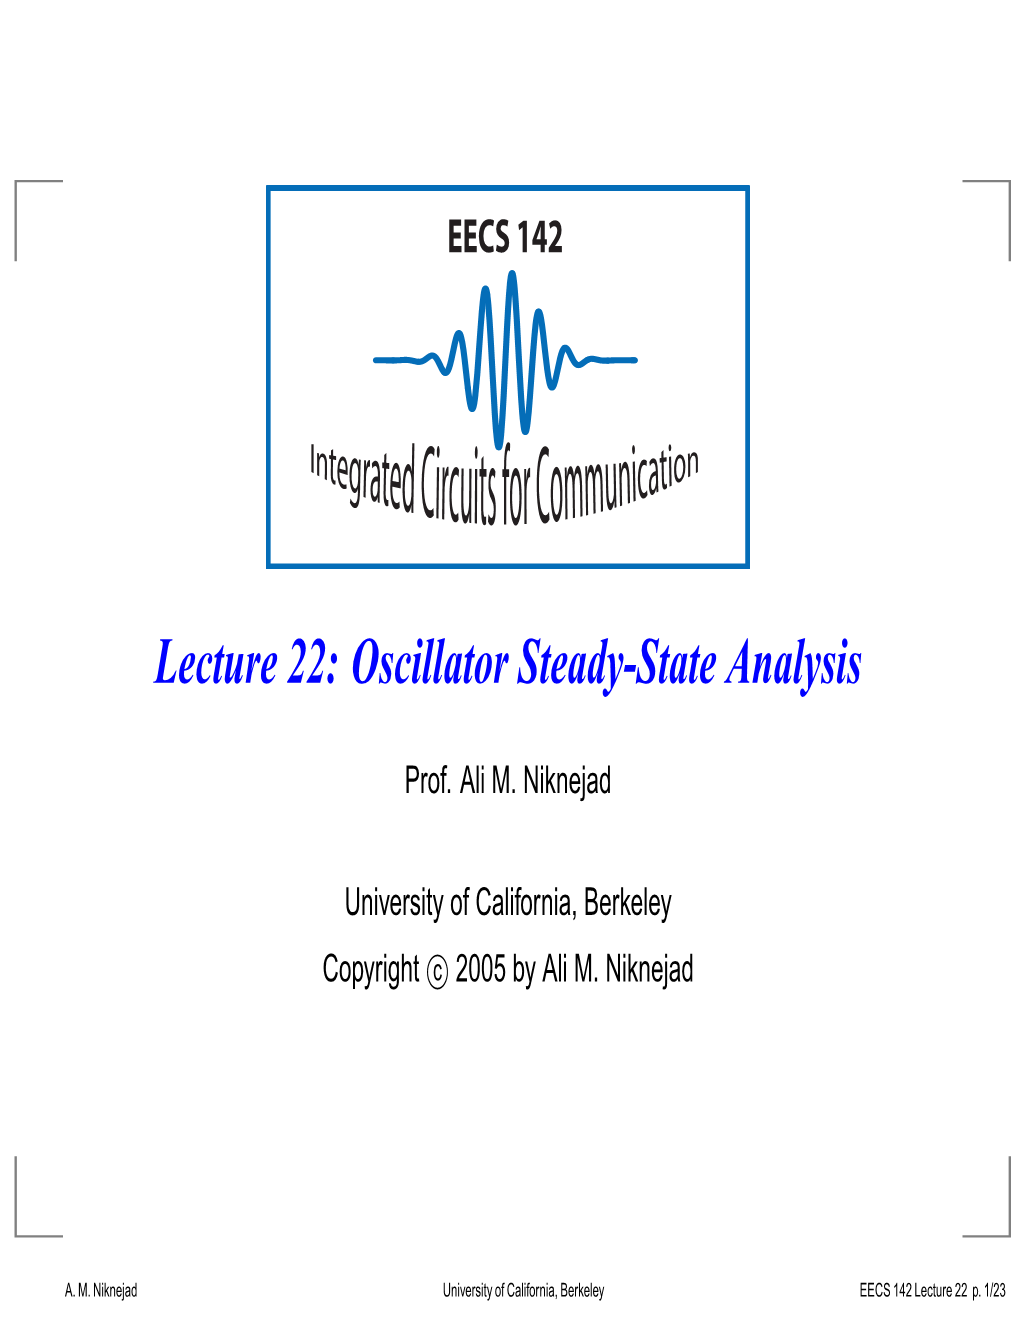 Oscillator Steady-State Analysis